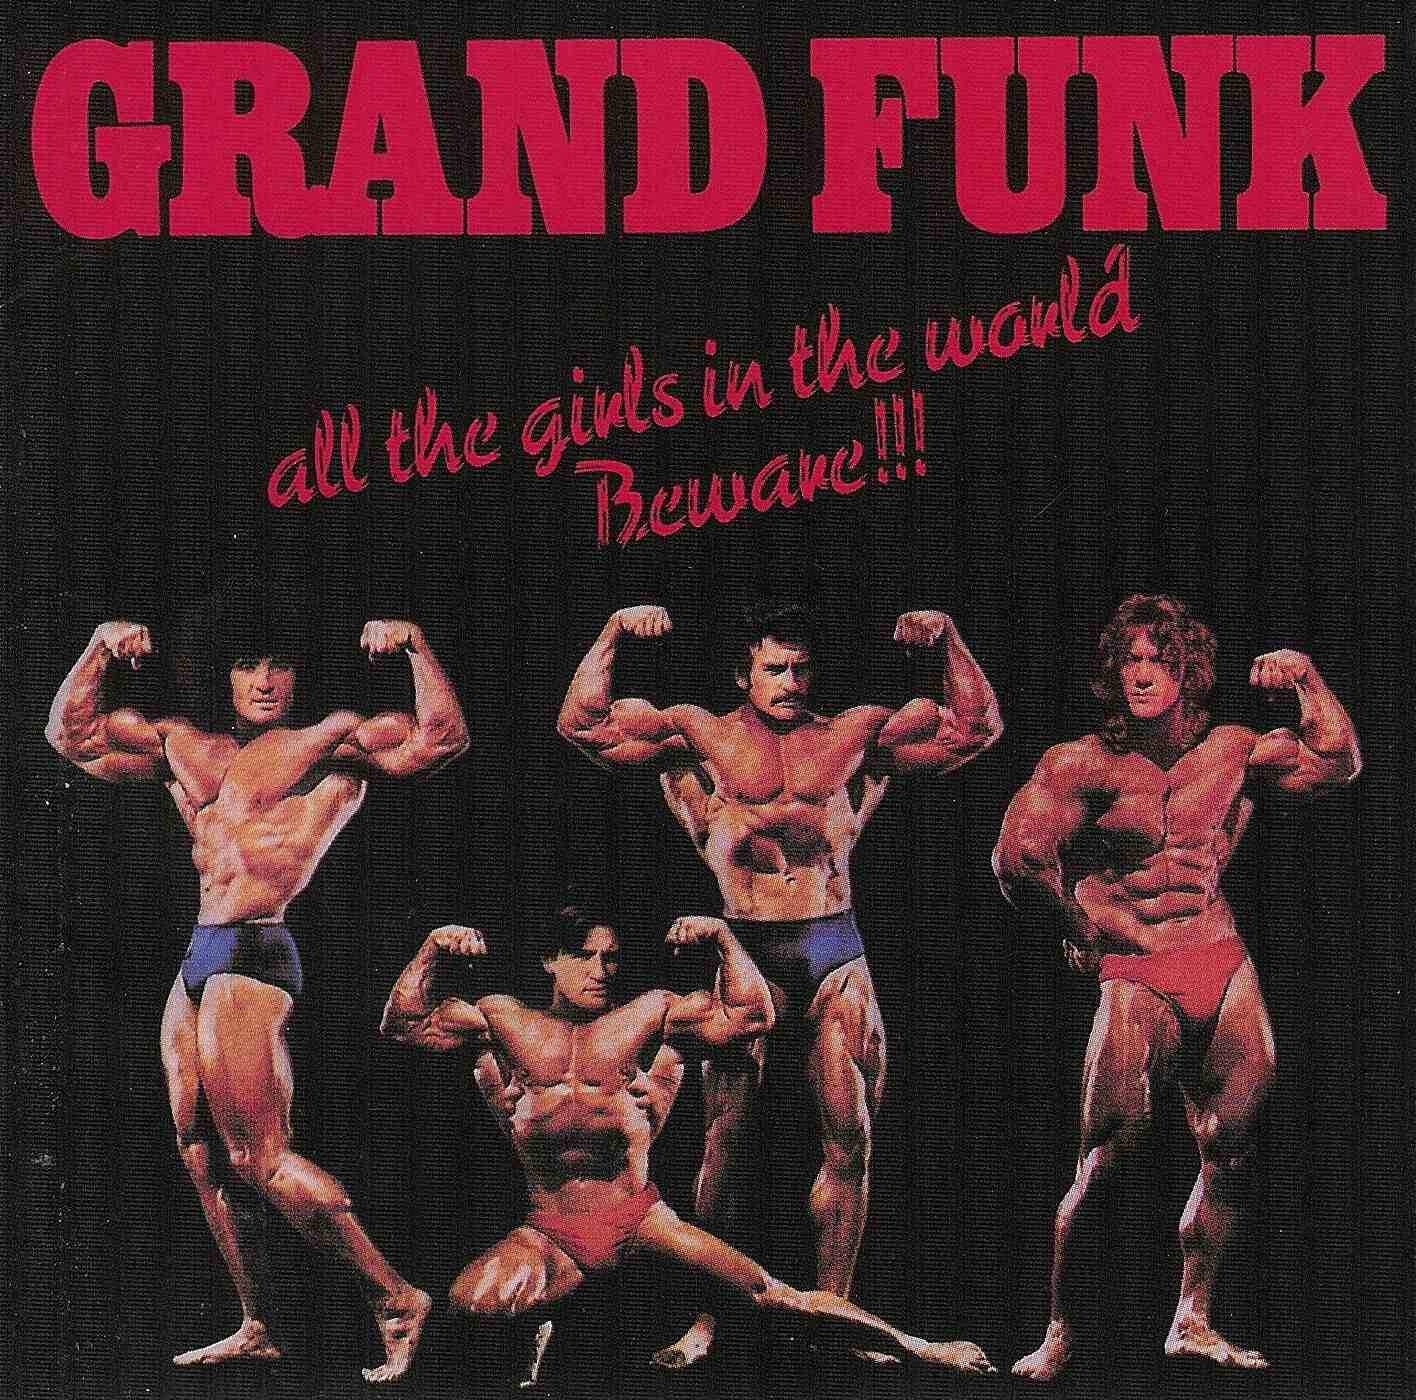 Burland Sax - Horrible 70s album titles like I've Got My Own Album To Do